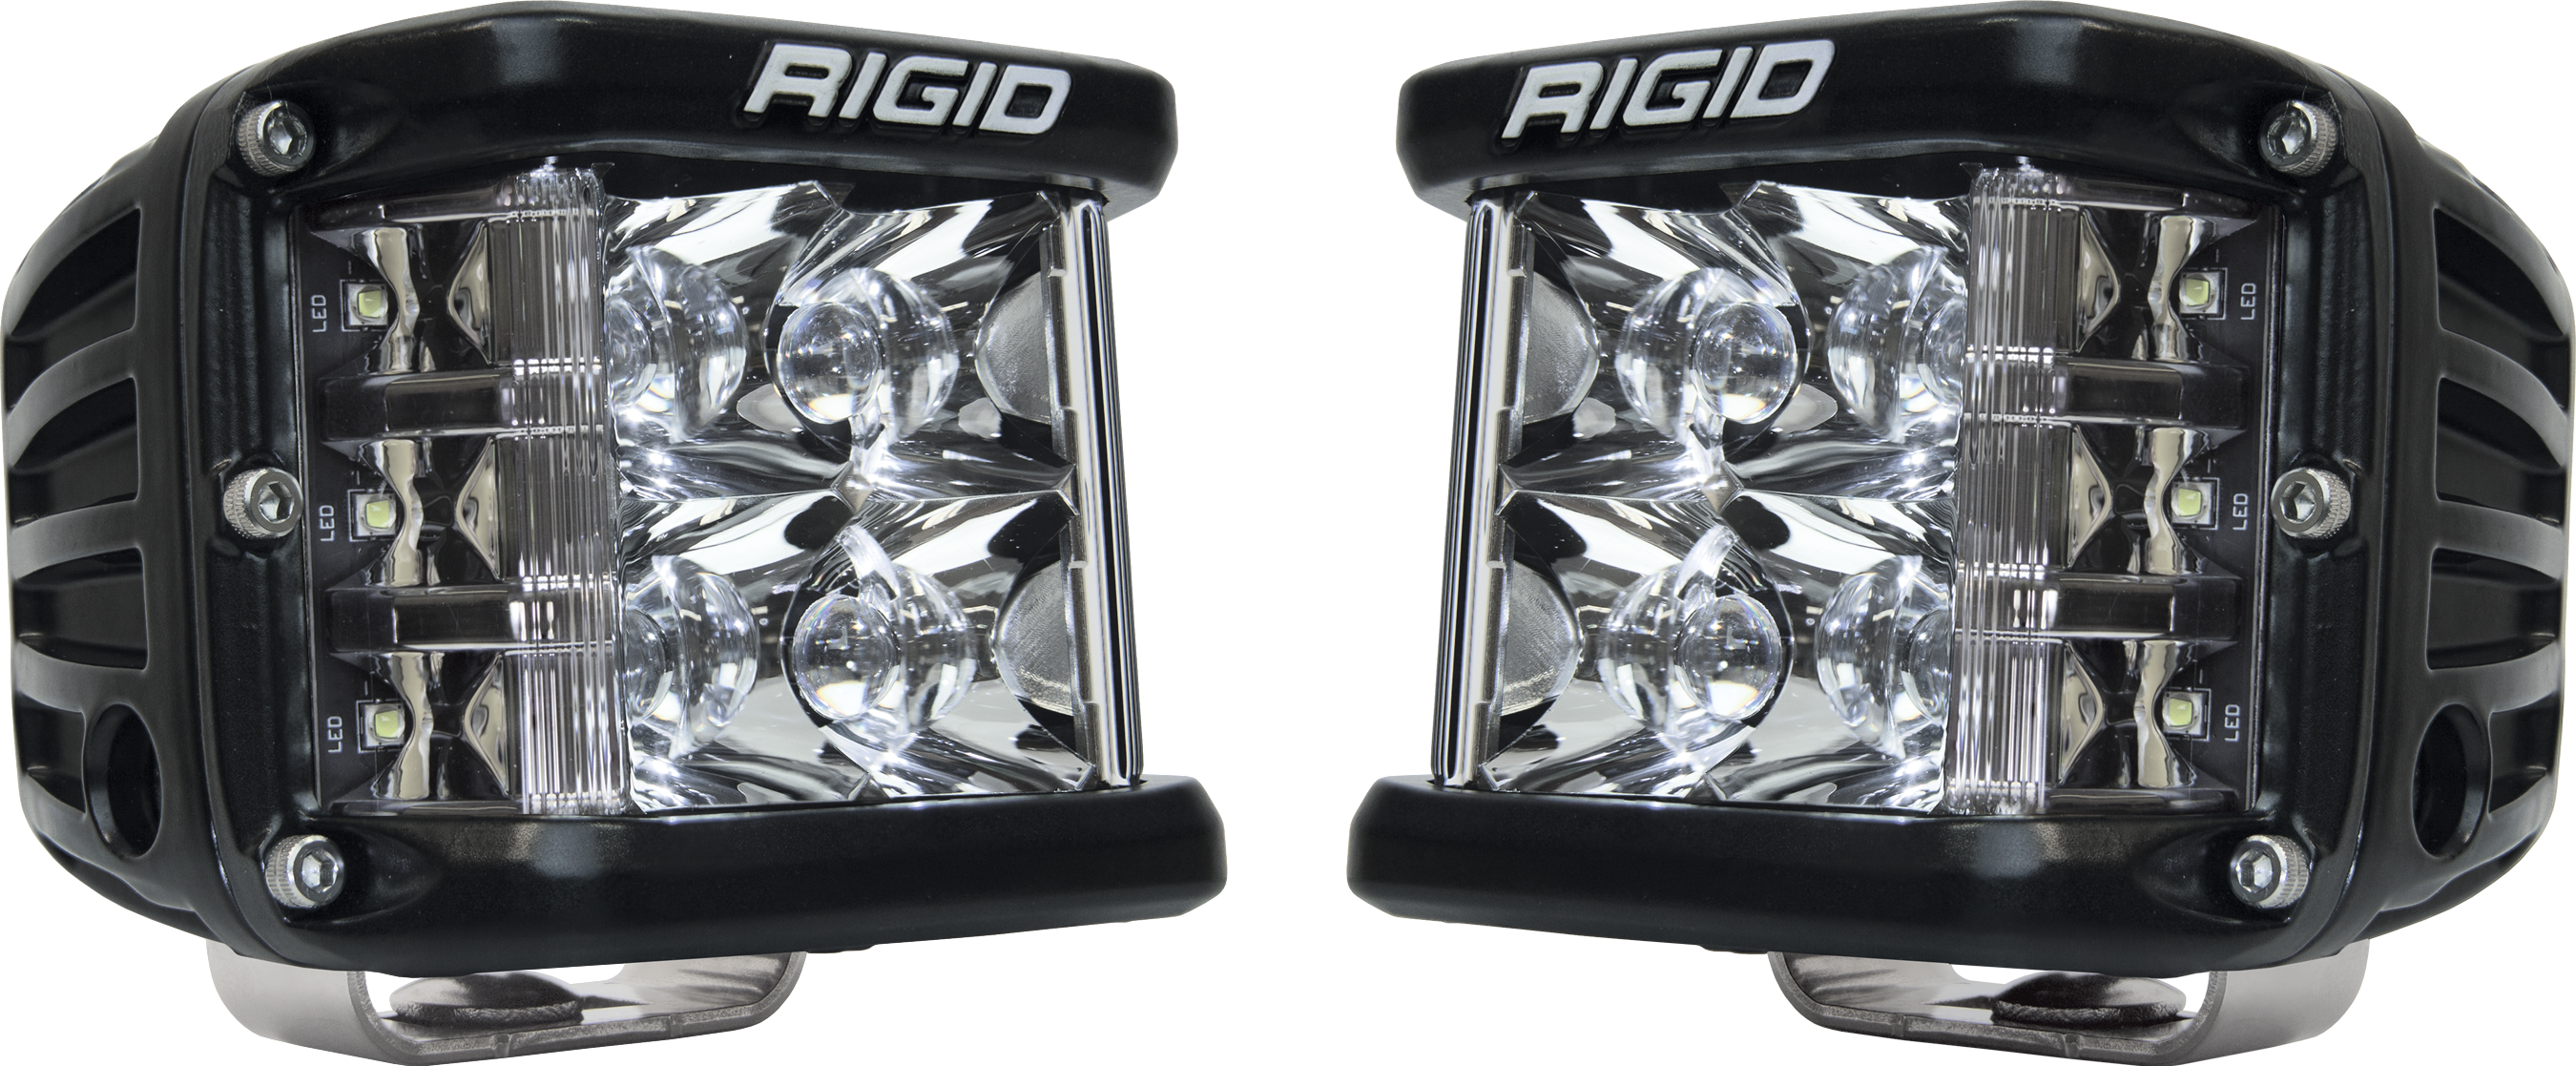 Show details for RIGID Industries 262213 Rigid D-Ss Pro Side Shooter, Spot Optic, Surface Mount, Black Housing, Pair